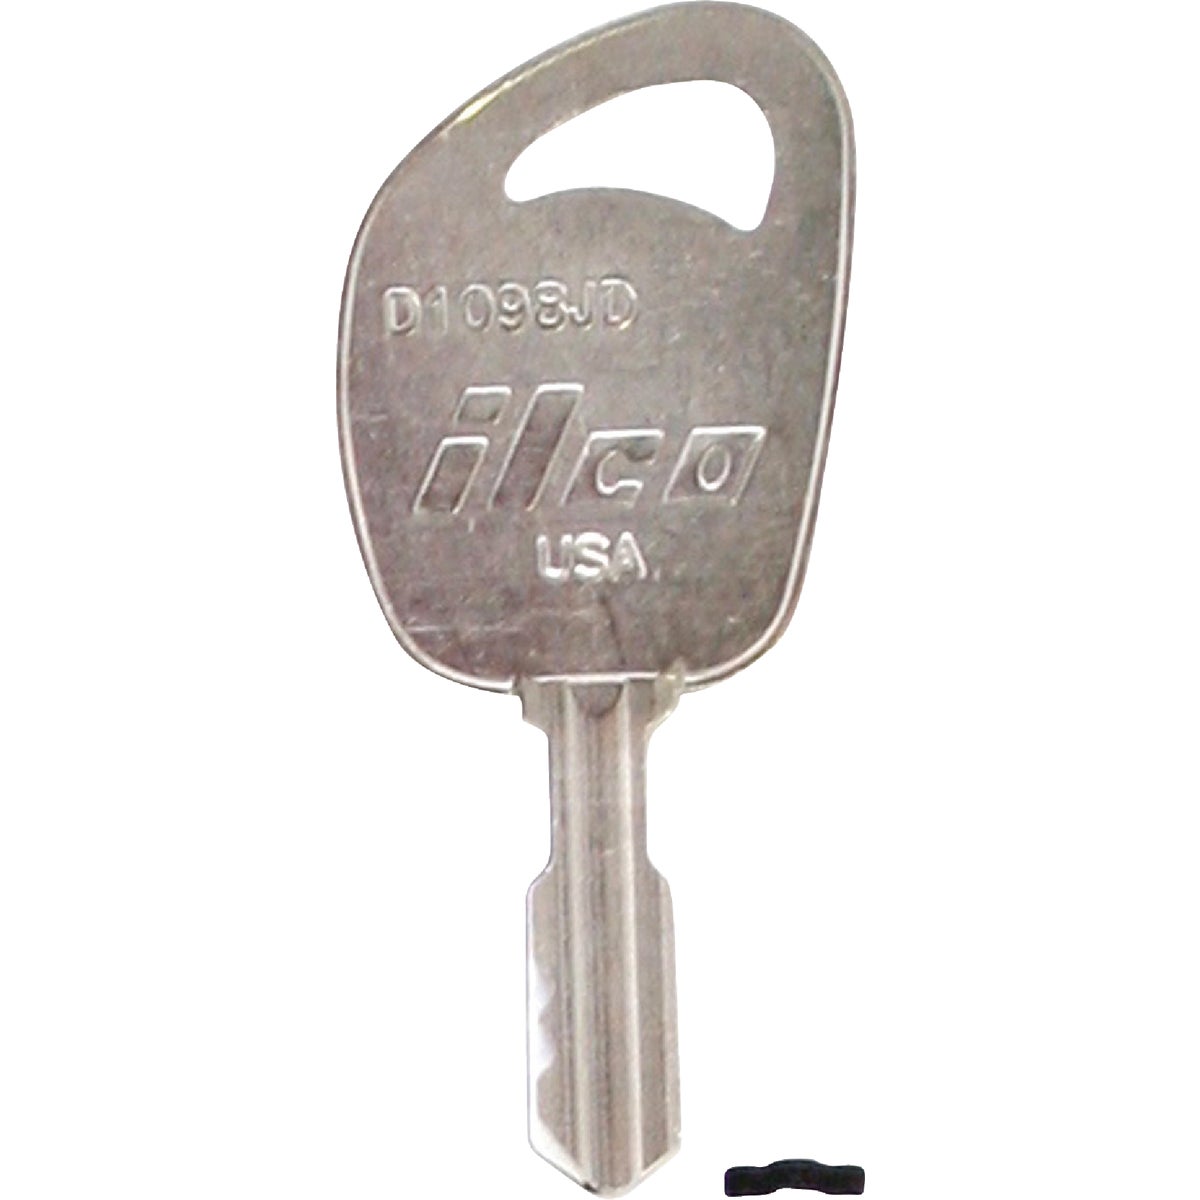 ILCO John Deere Nickel Plated Tractor Key, D1098JD (10-Pack)